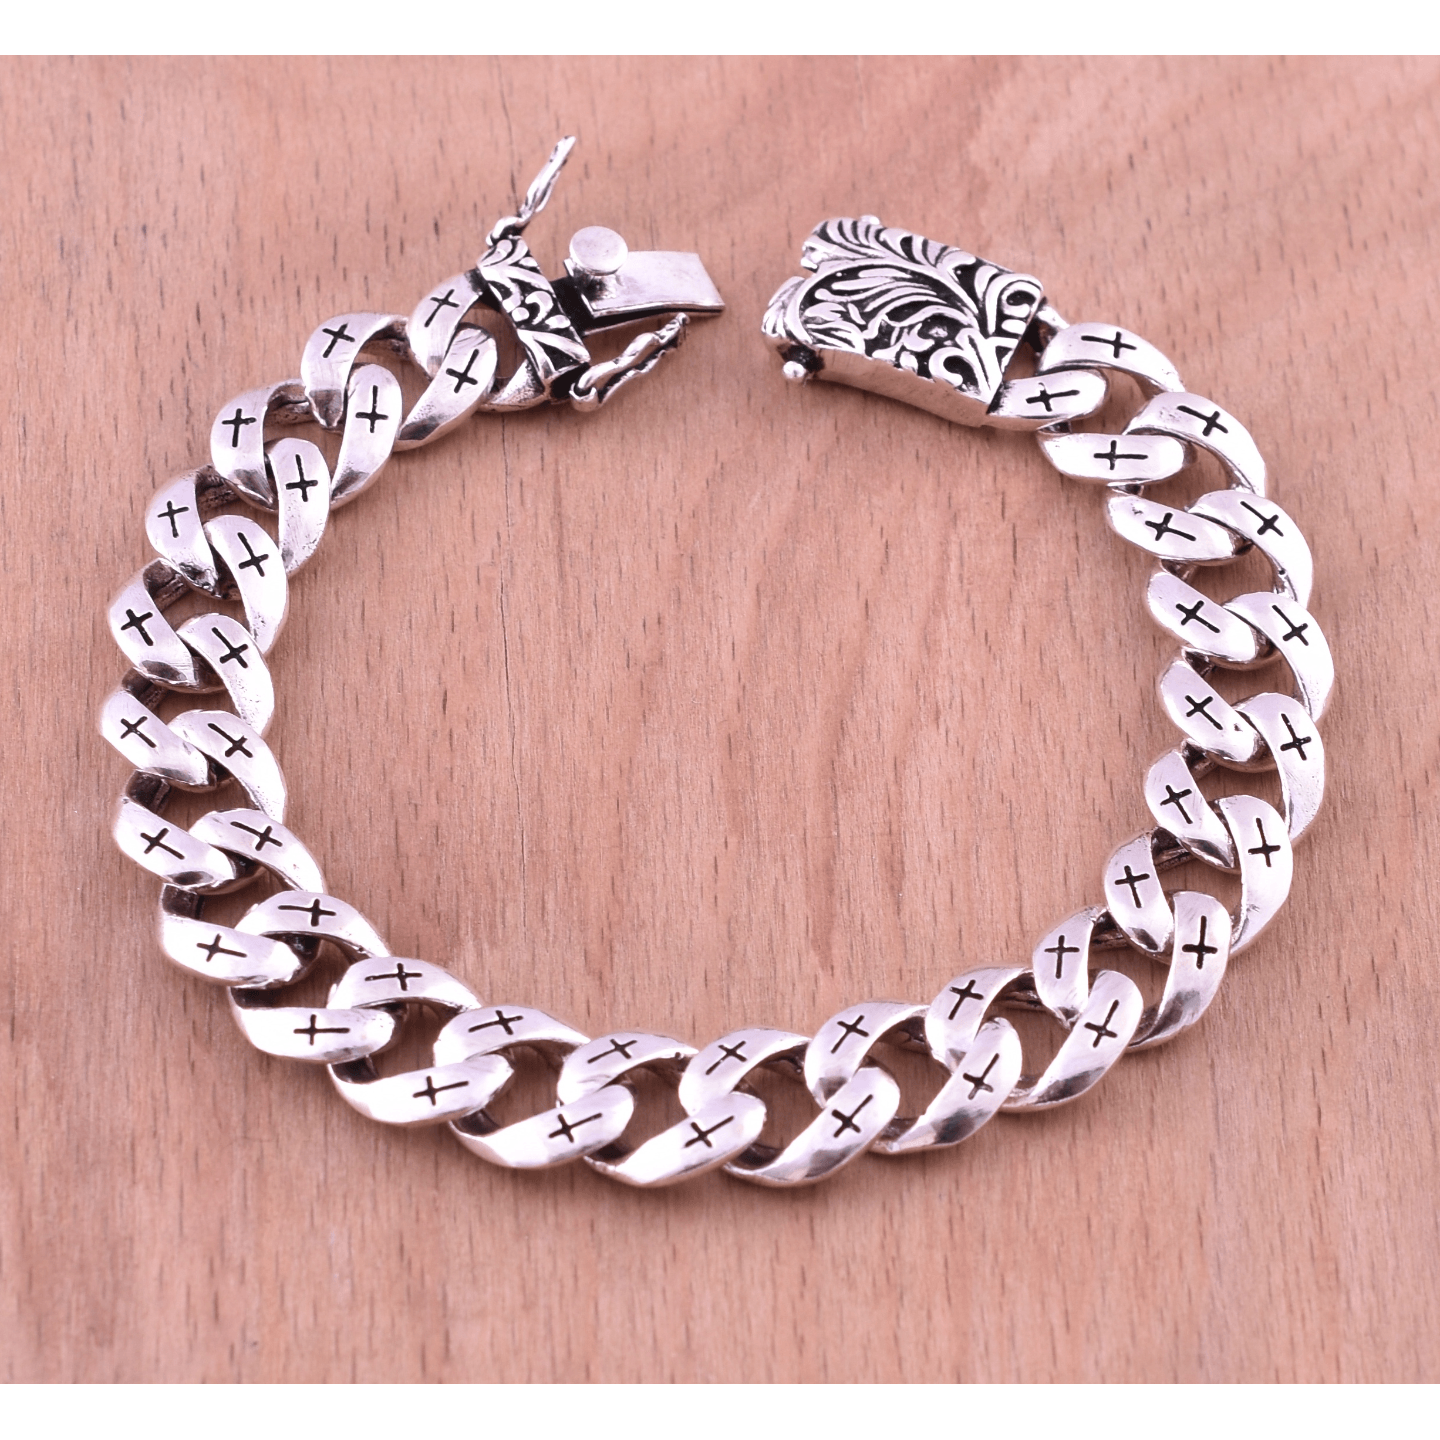 Solid 925 Sterling Silver Curb Chain Bracelet - Silver Oxidize Link Chain Bracelet - Length 8.25 Inches - Handmade Bracelet